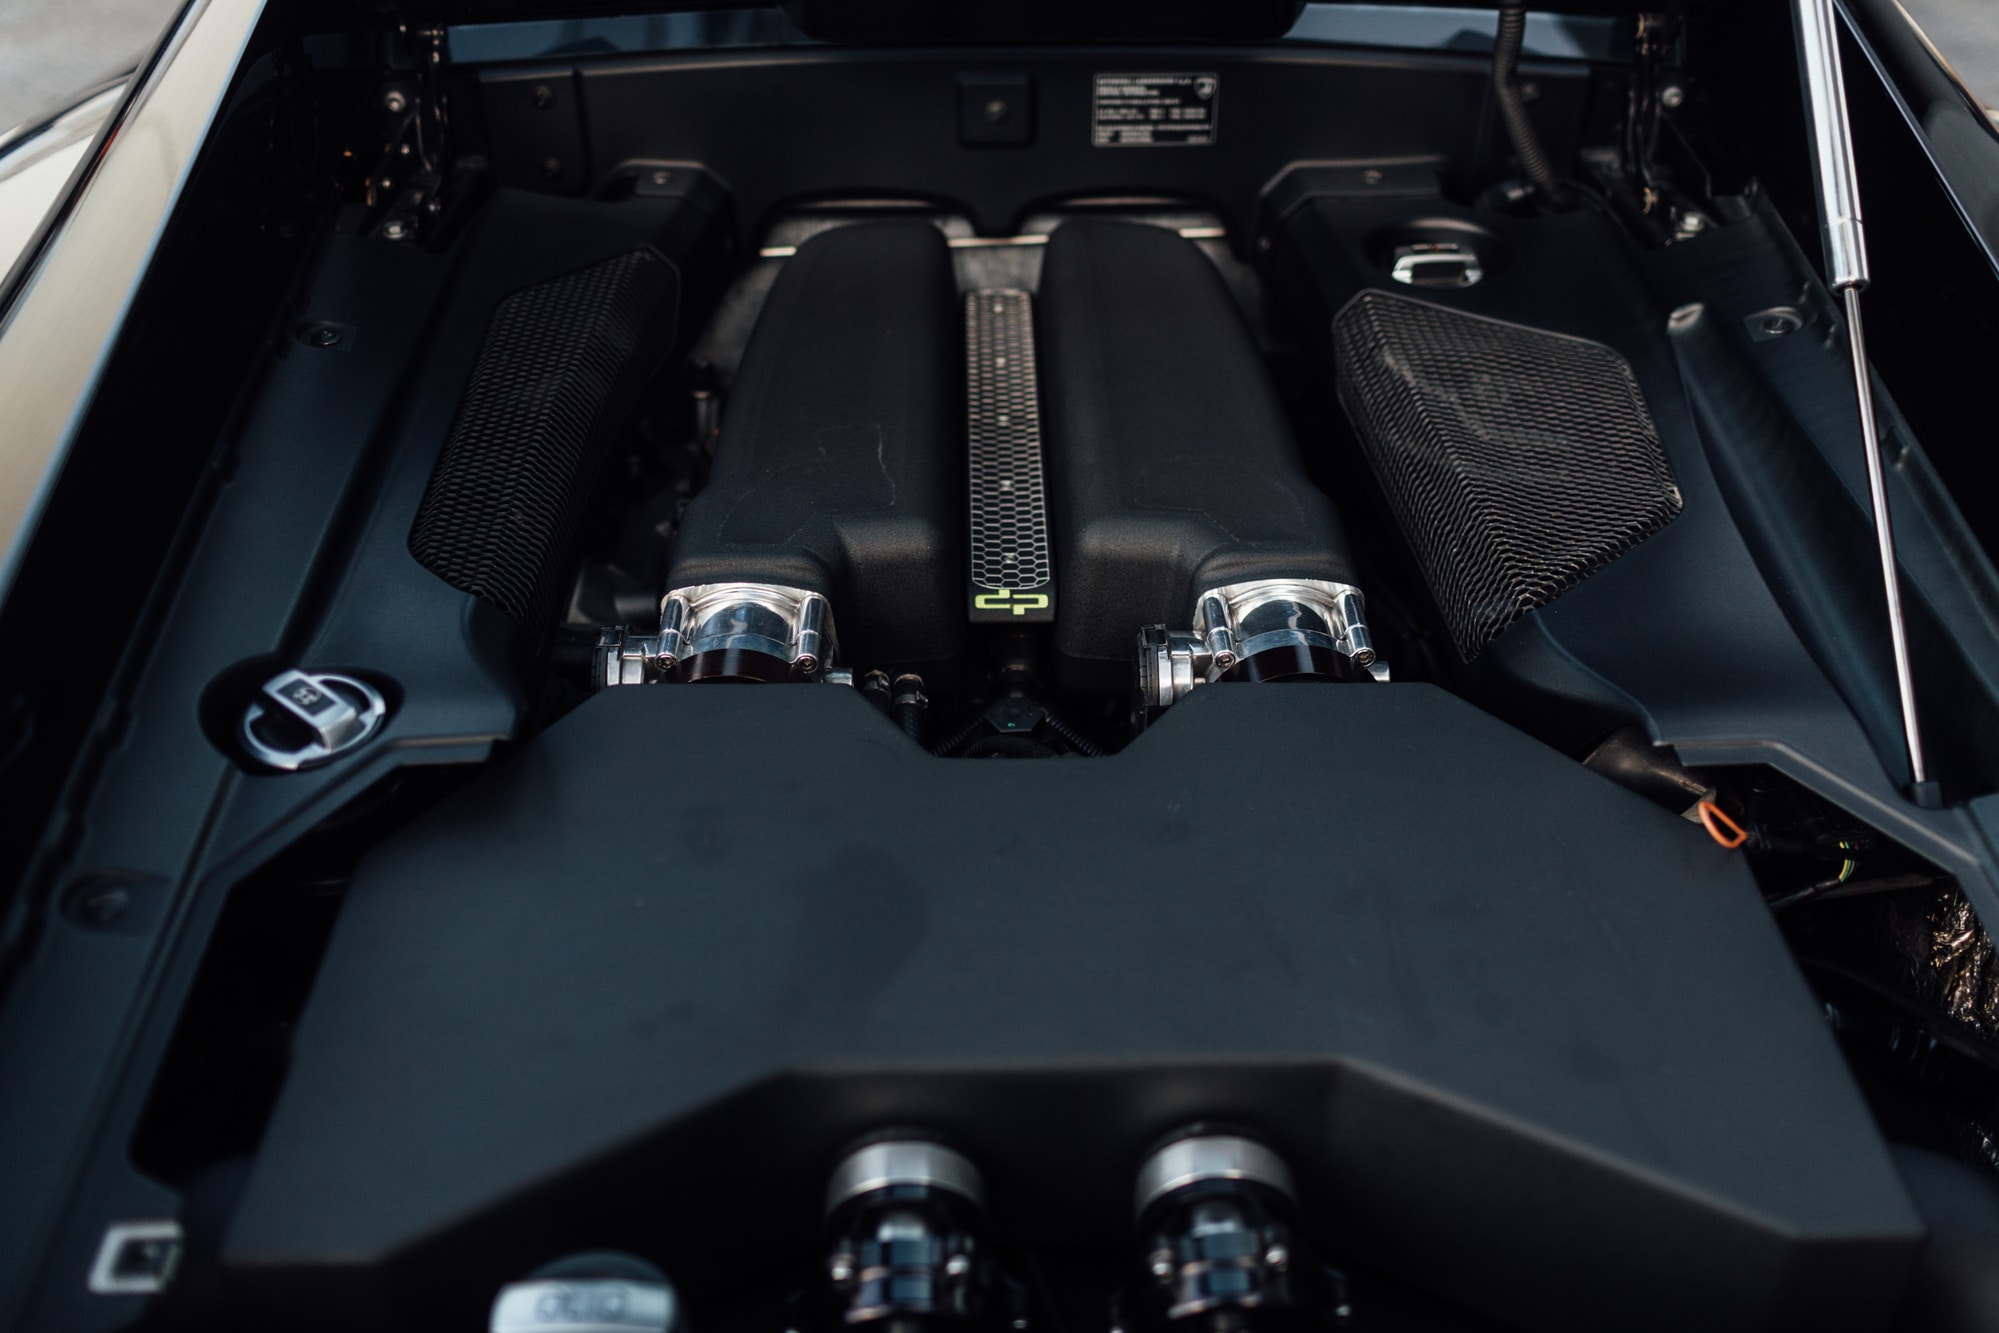 2009 Lamborghini Gallardo Twin-Turbo (LP 560-4) by Dallas Performance (1,847 BHP/ 1,719 WHP) | 6 Speed Manual